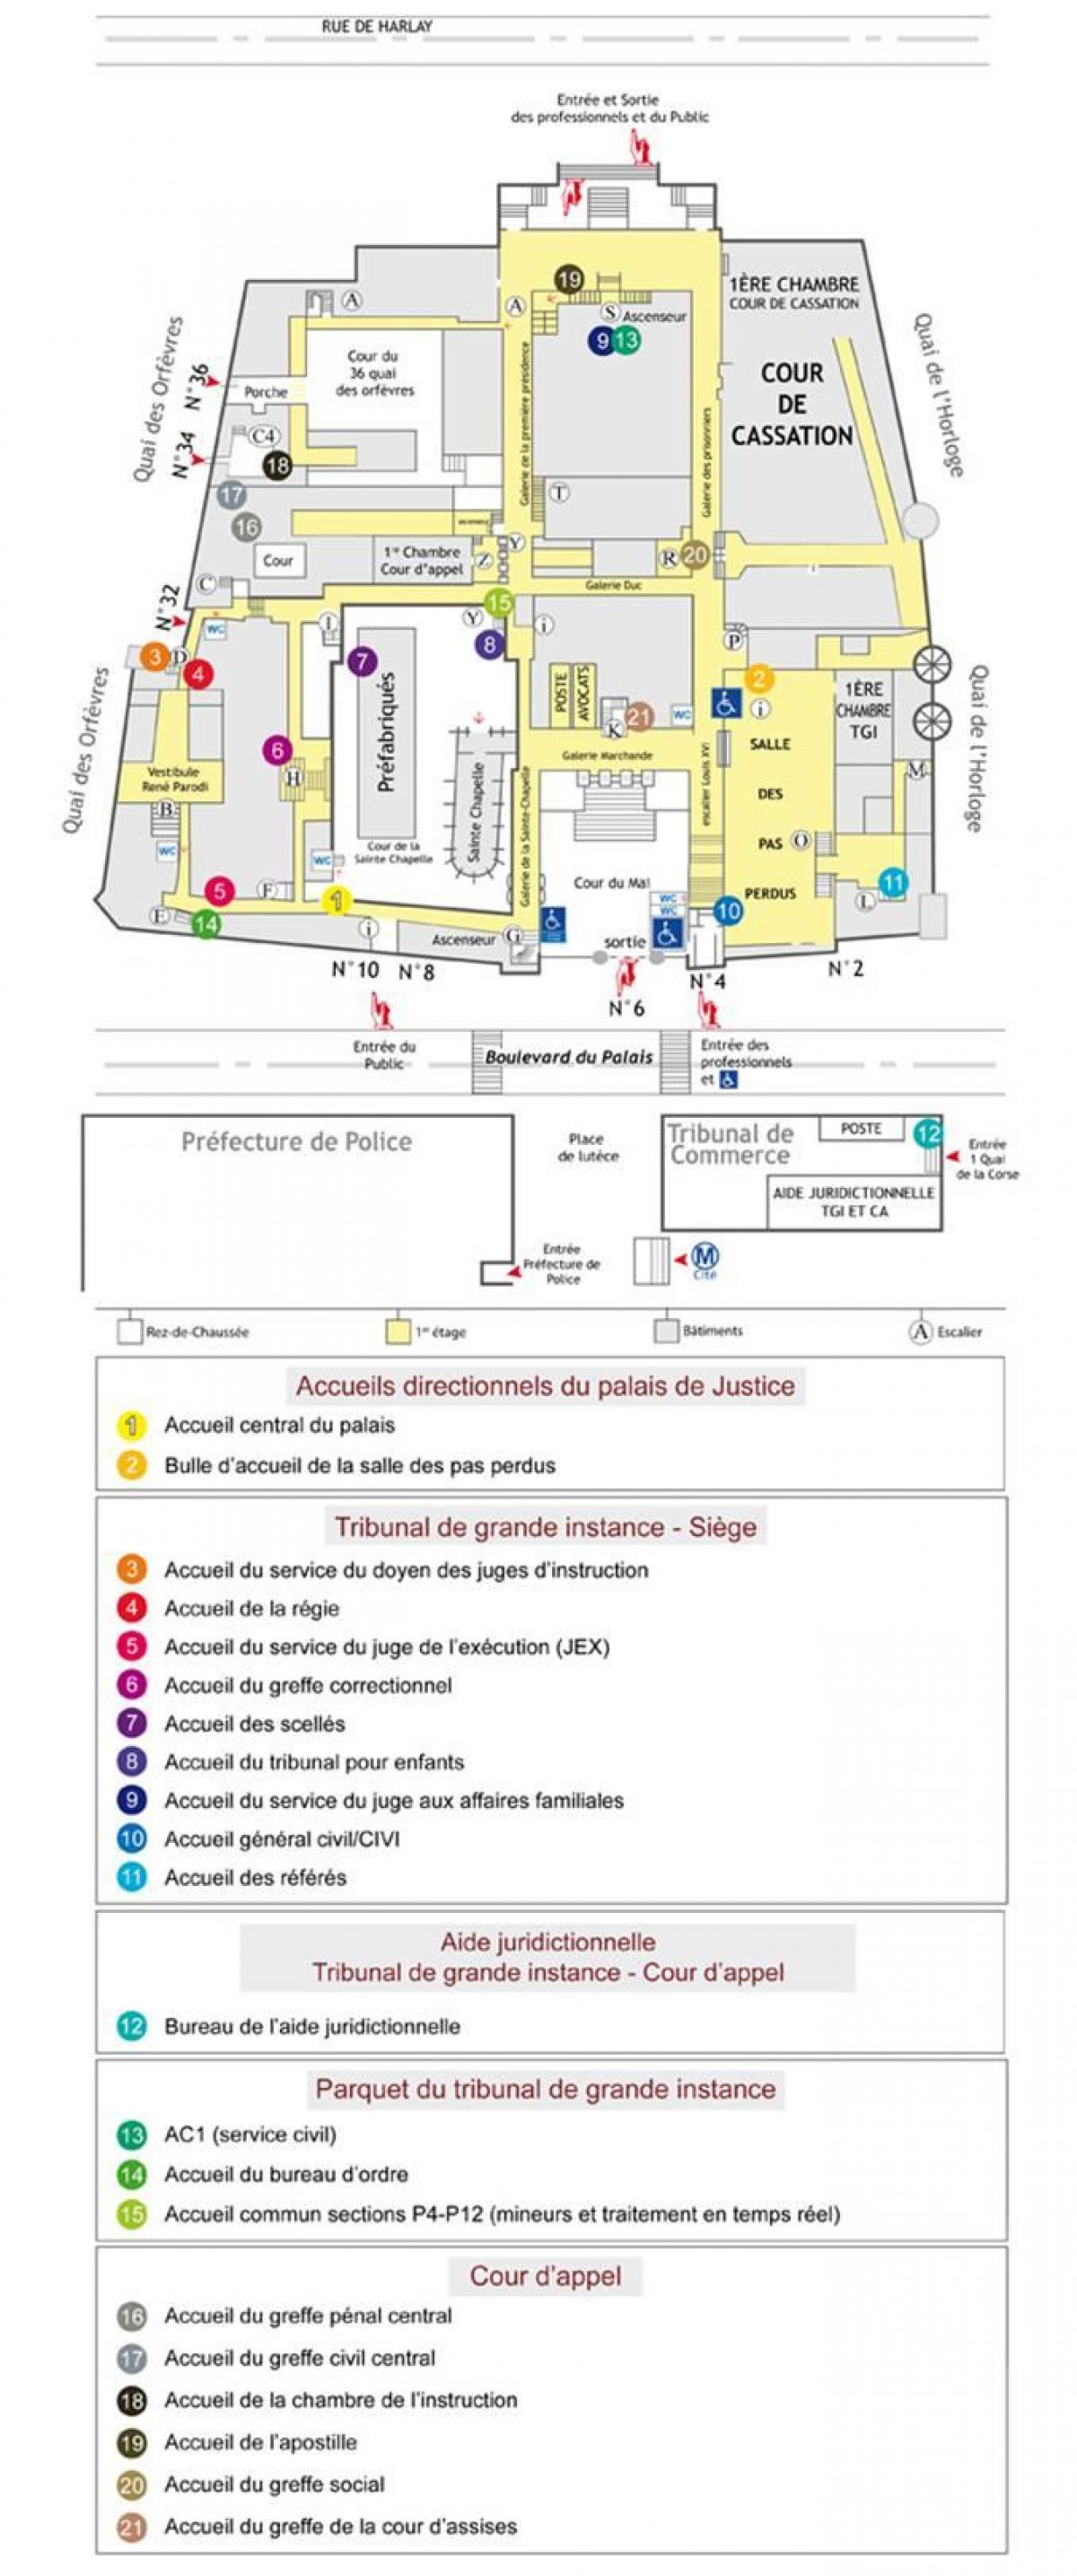 Peta Palais de Justice Paris